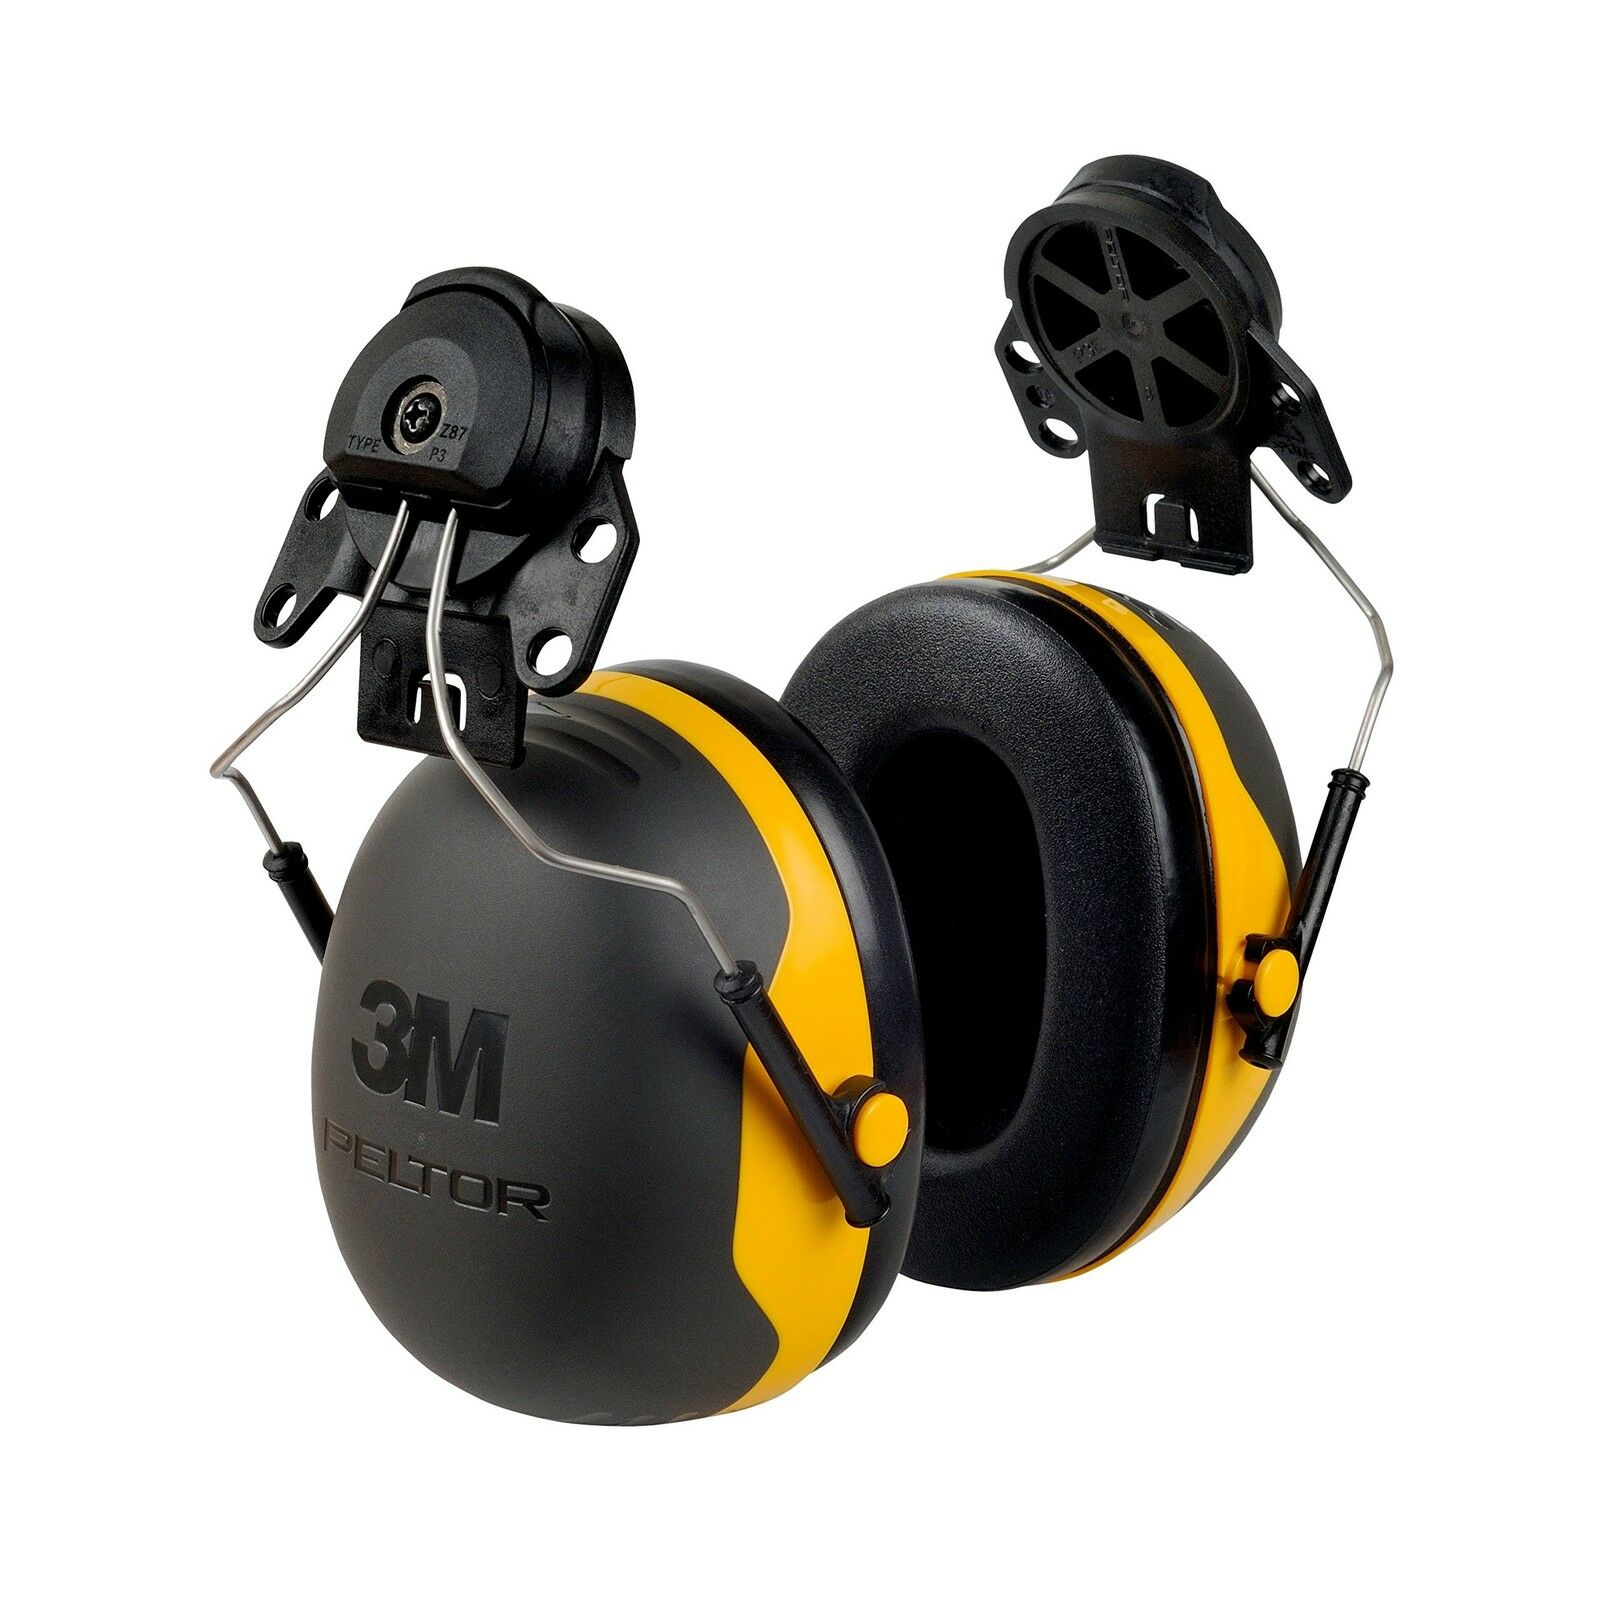 3m Peltor Ear Muffs Earmuff Headphones Hearing Protection Cap Mount Hard Hat Fit